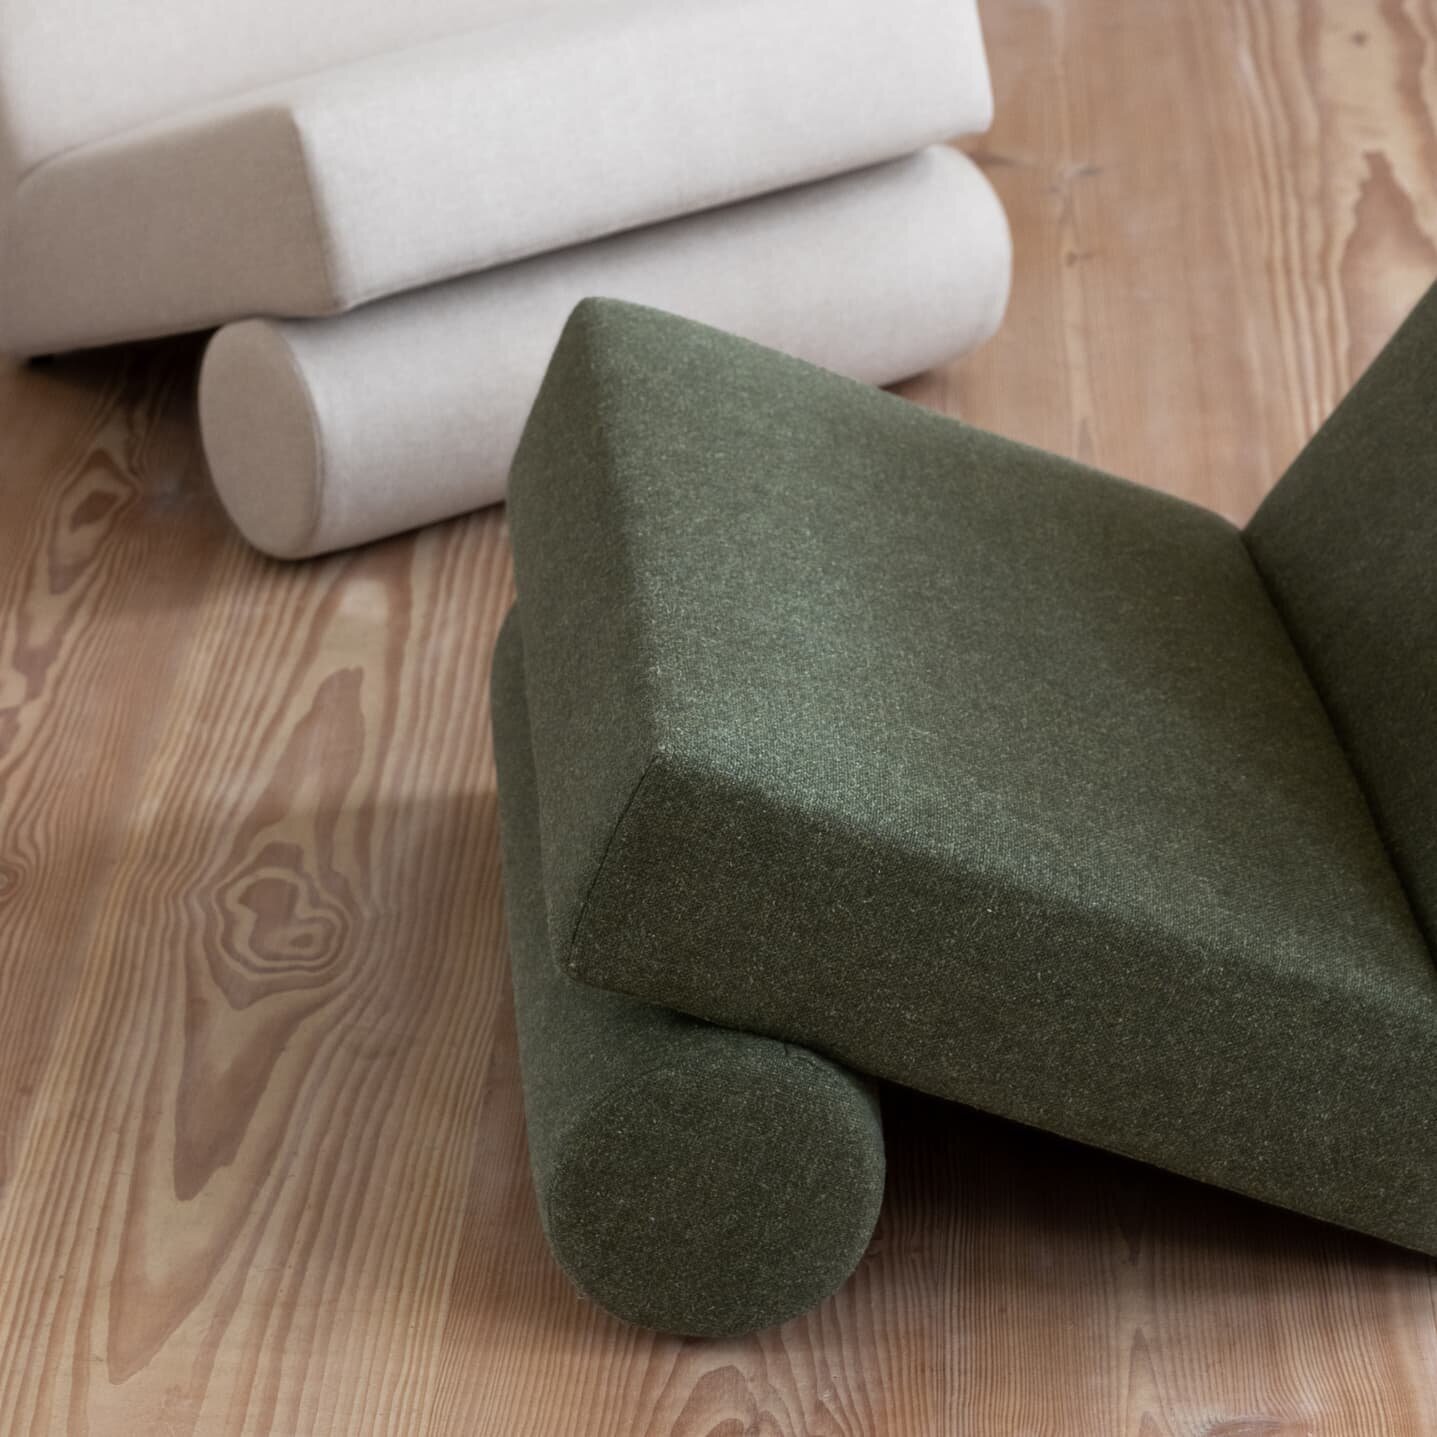 Design modern sofa | Lean Lounge Chair soil natural01 | Studio HENK| 